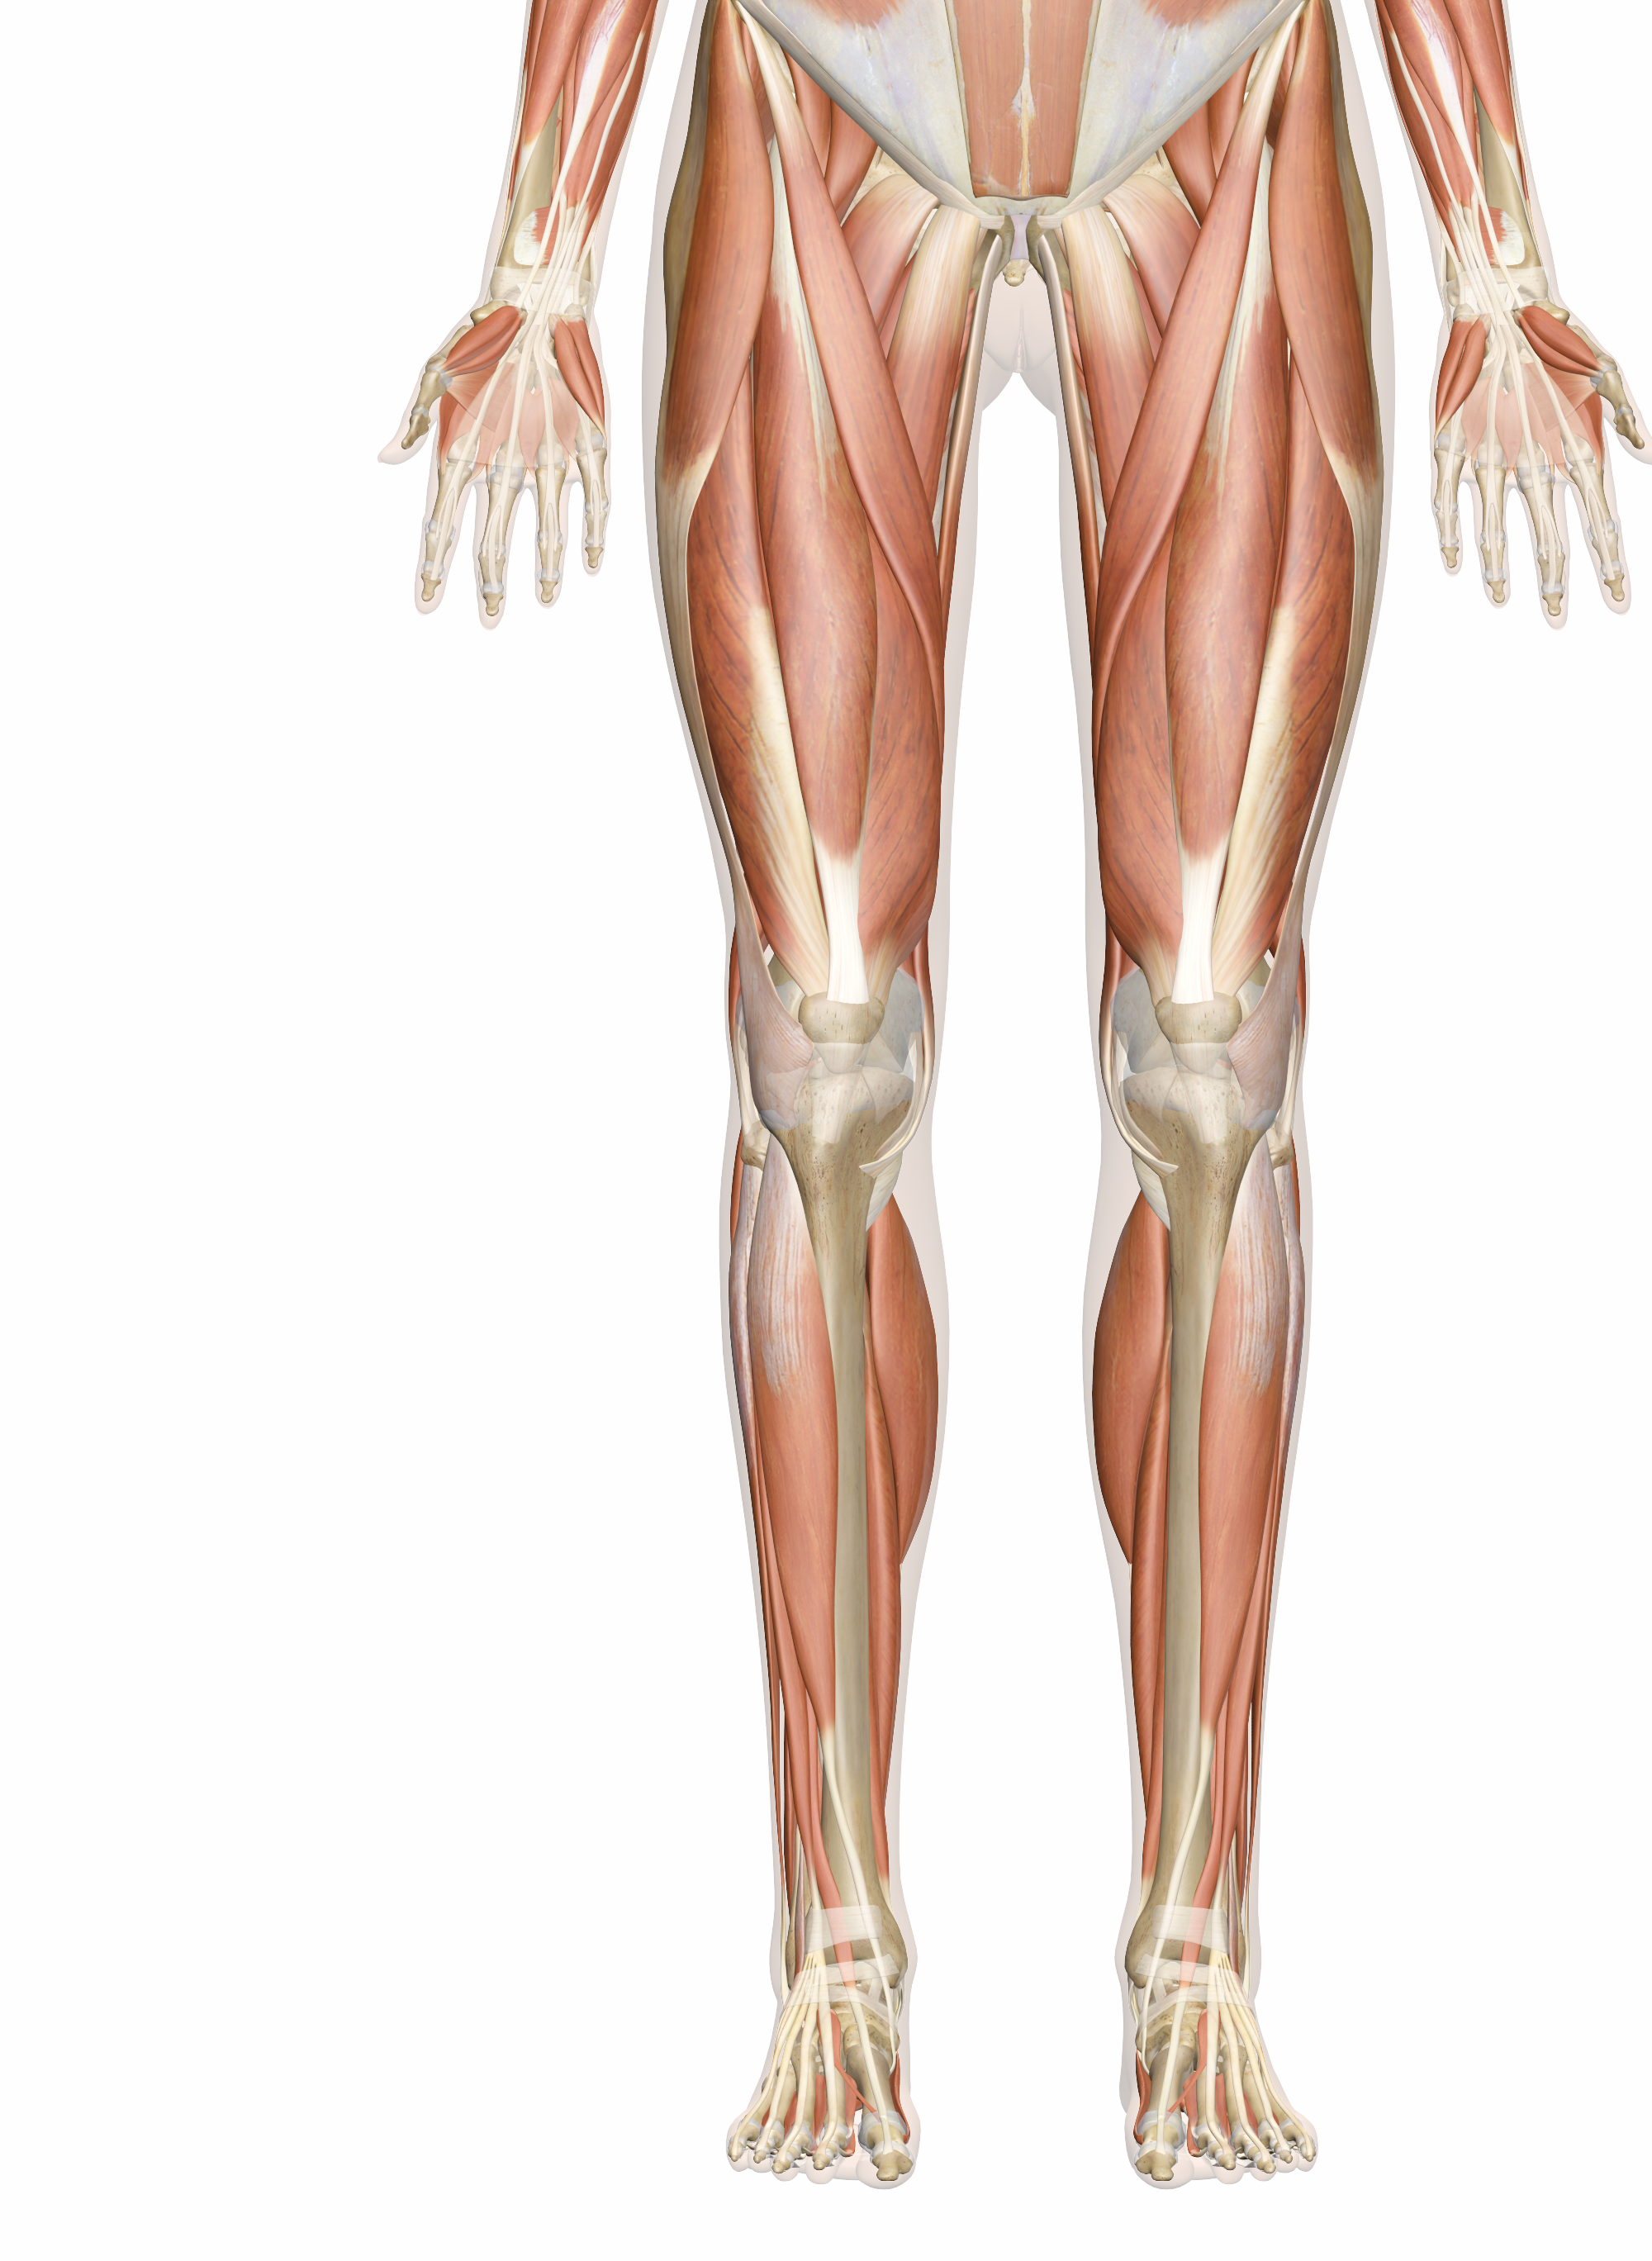 leg and foot anatomy